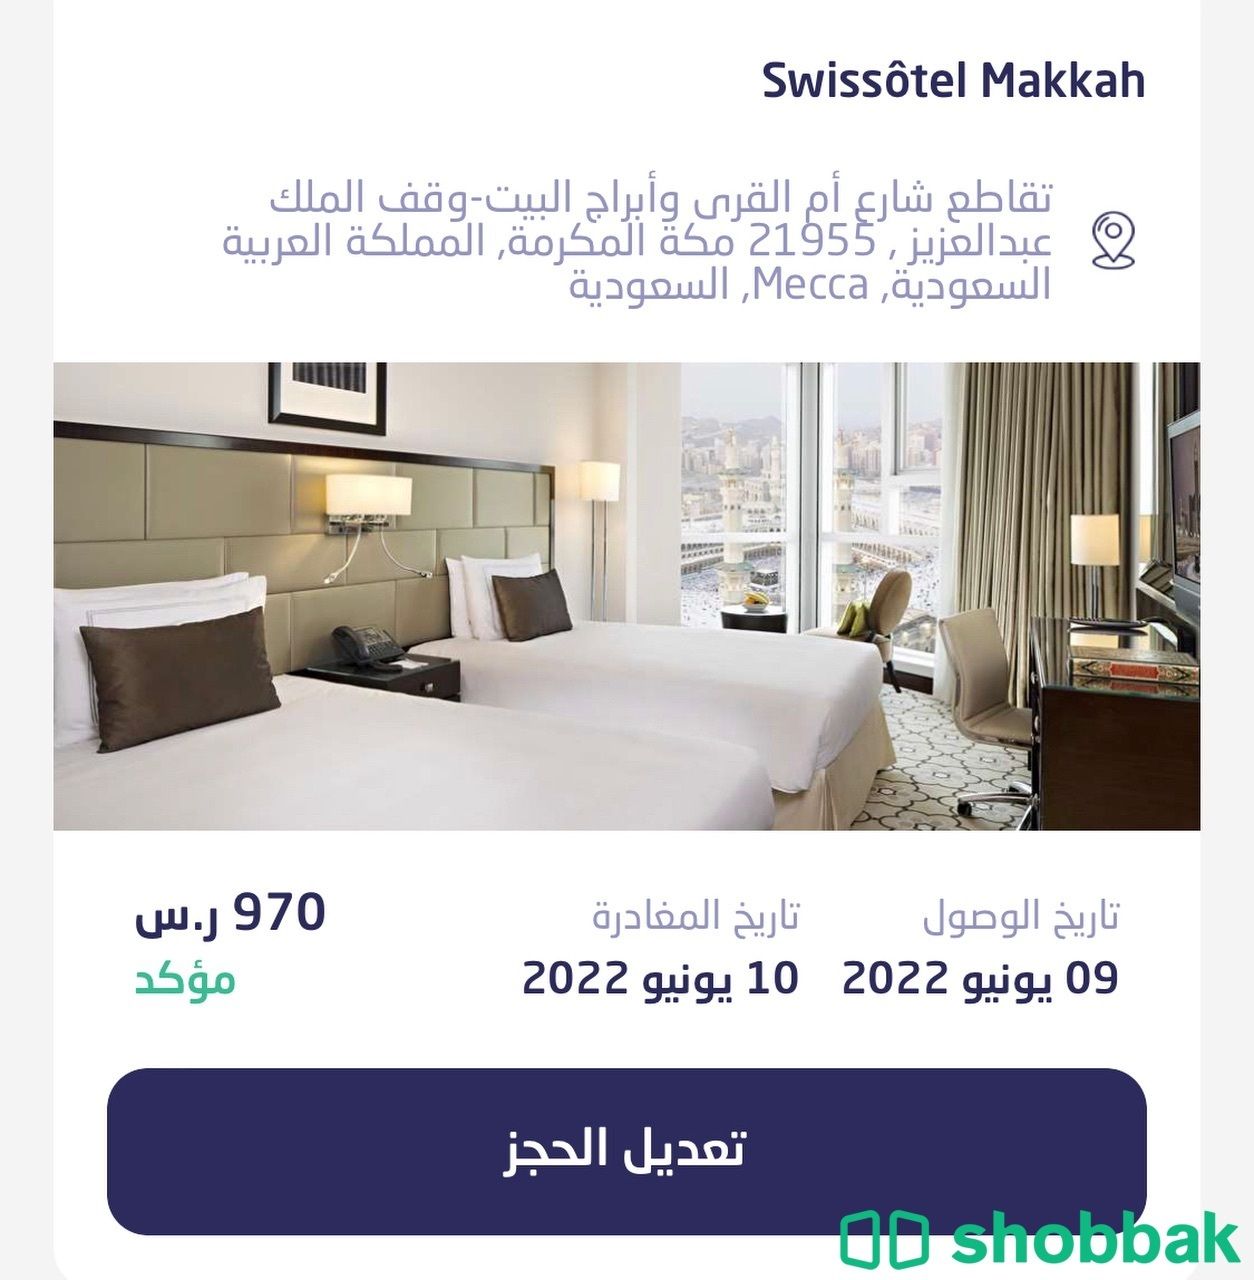 غرفتين فندق سويس اوتيل مكه  Shobbak Saudi Arabia